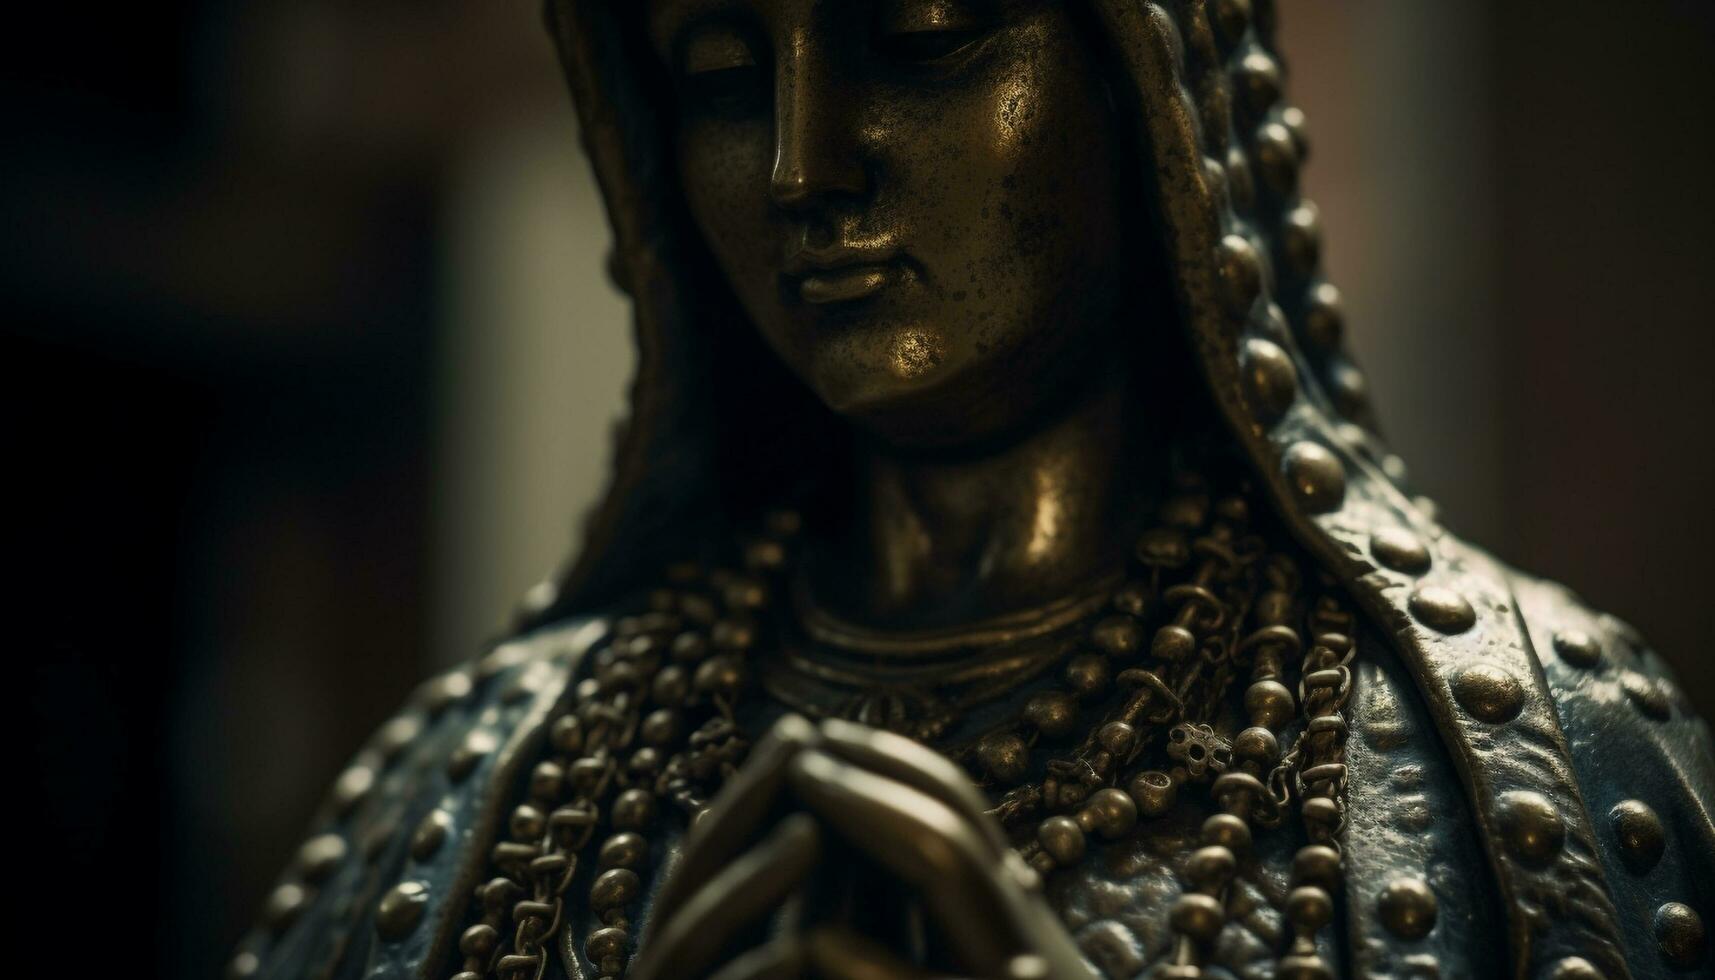 Metal figurine of Buddha, a symbol of spirituality and meditation generated by AI photo